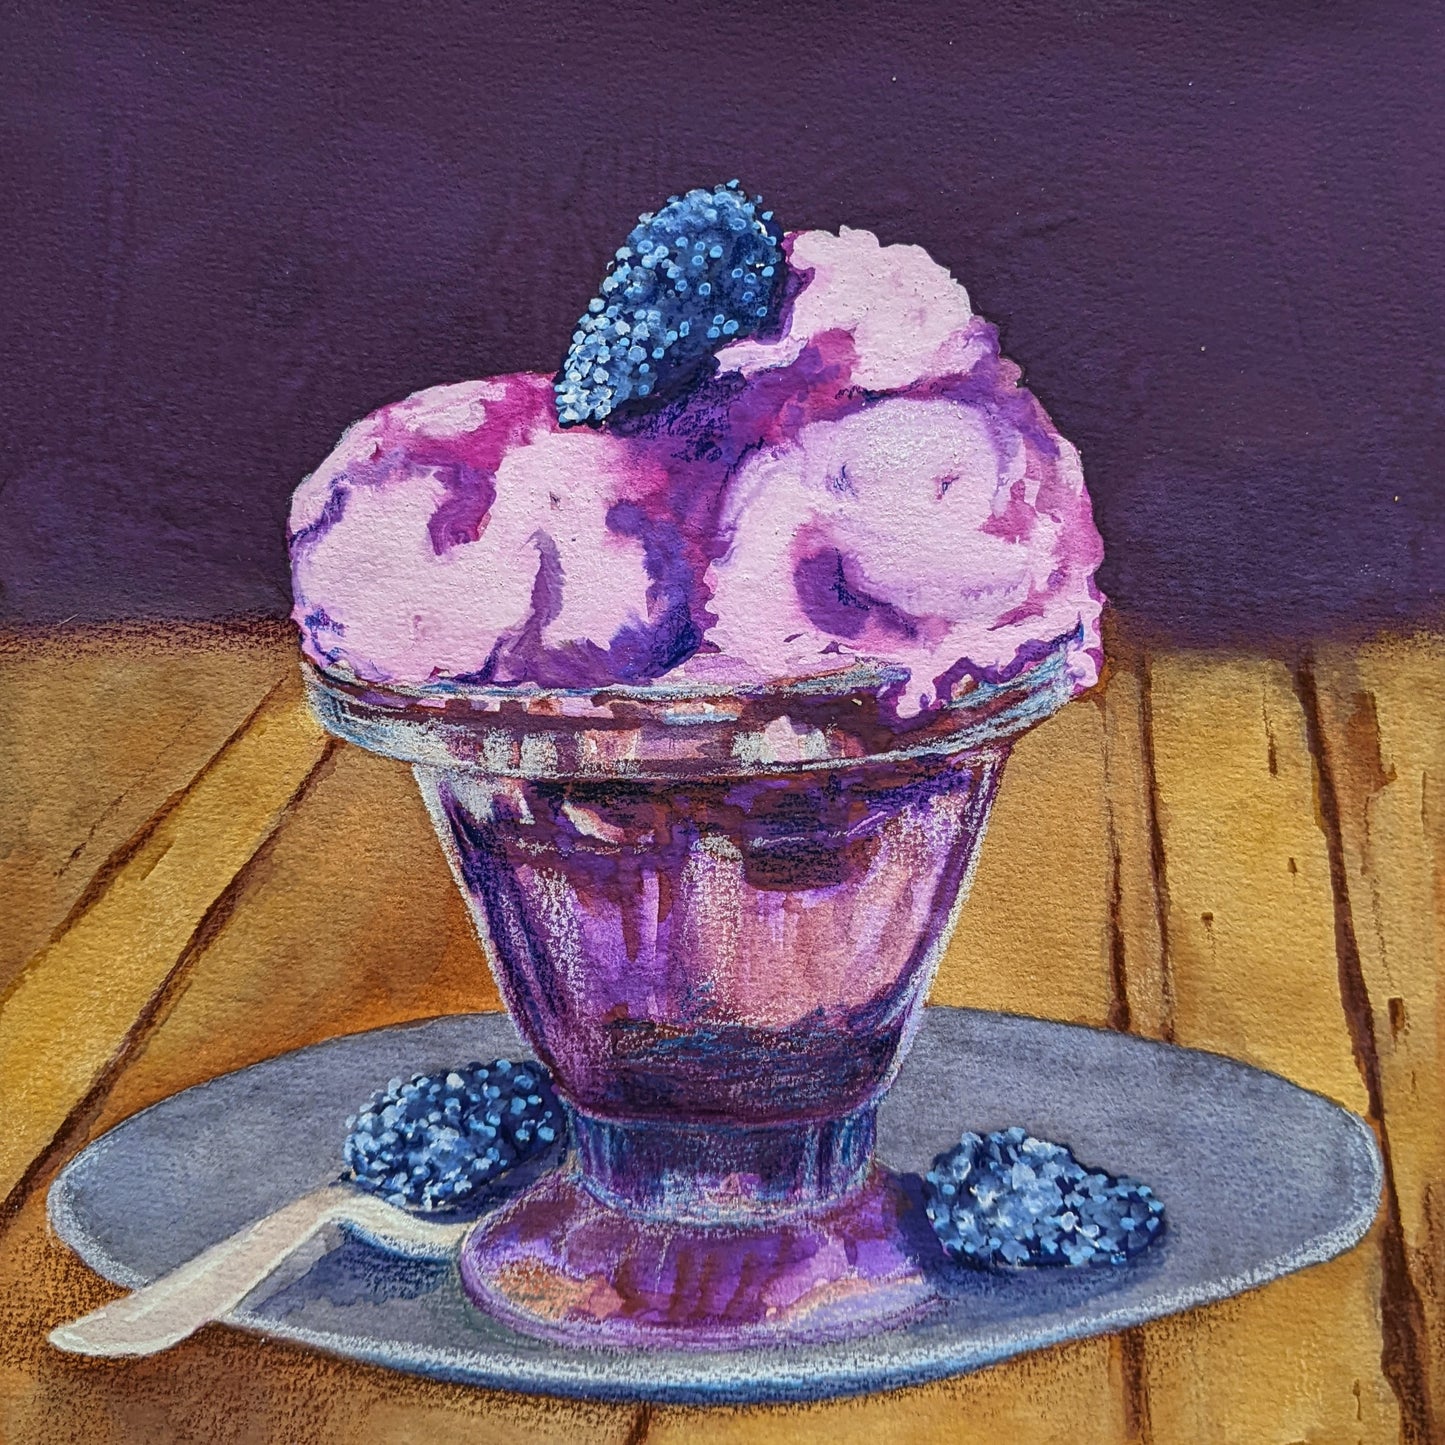 Bowlful of Mulberry Ice Cream